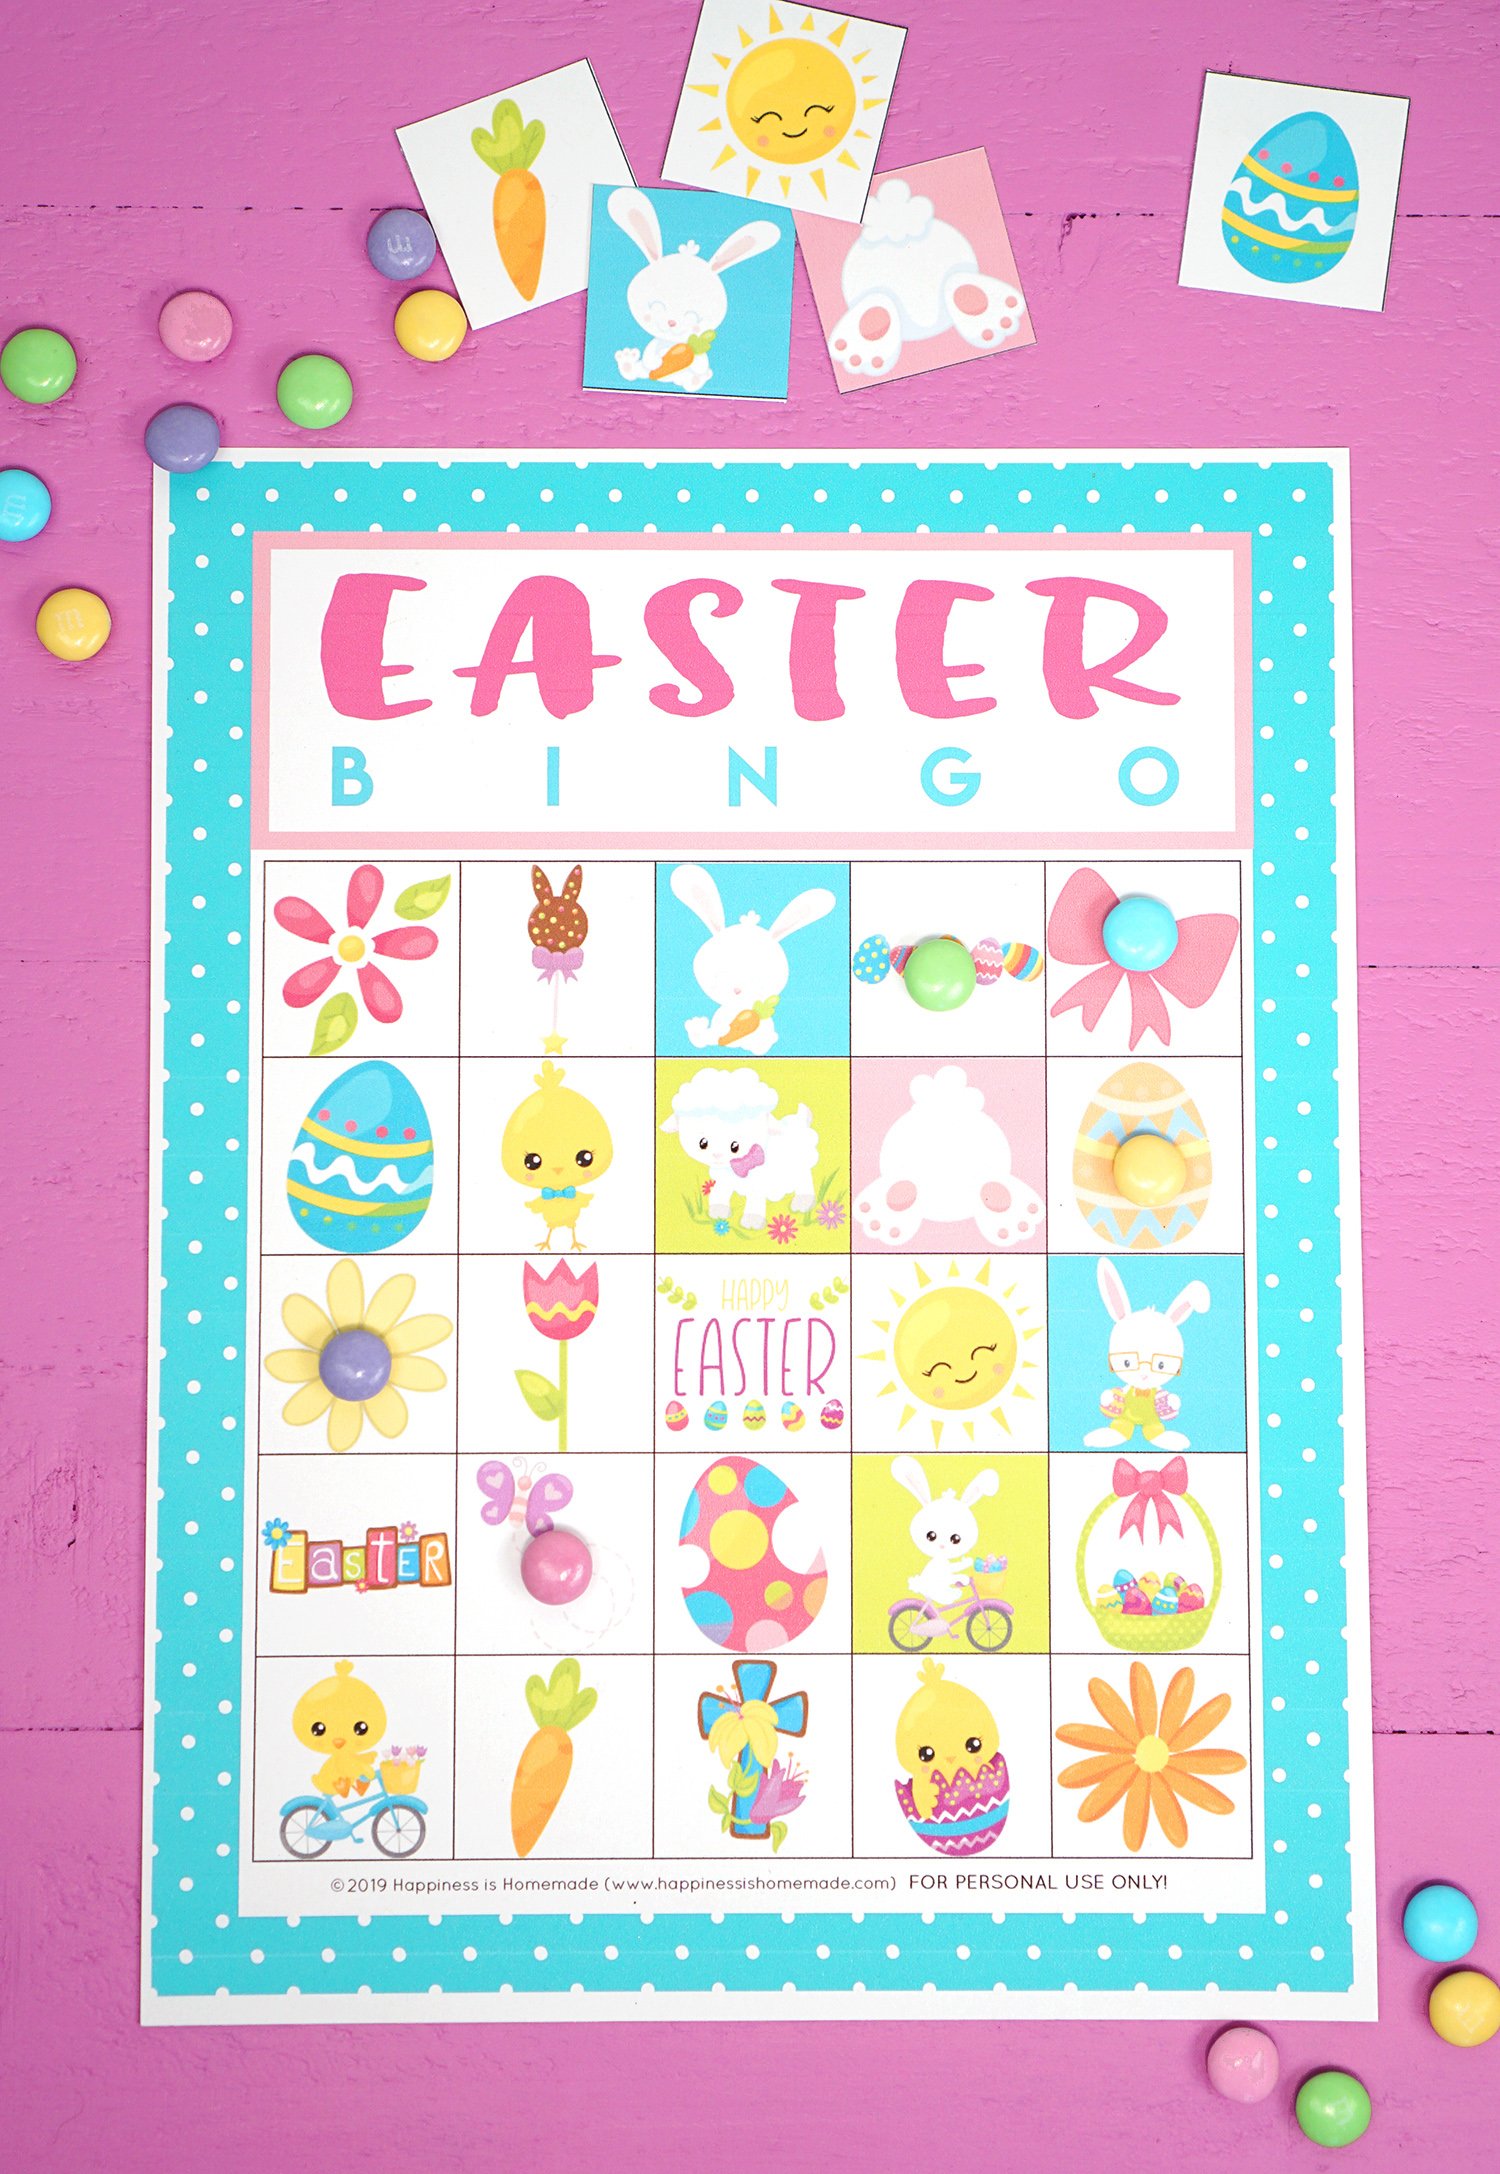 FREE Printable Easter Bingo Game Cards